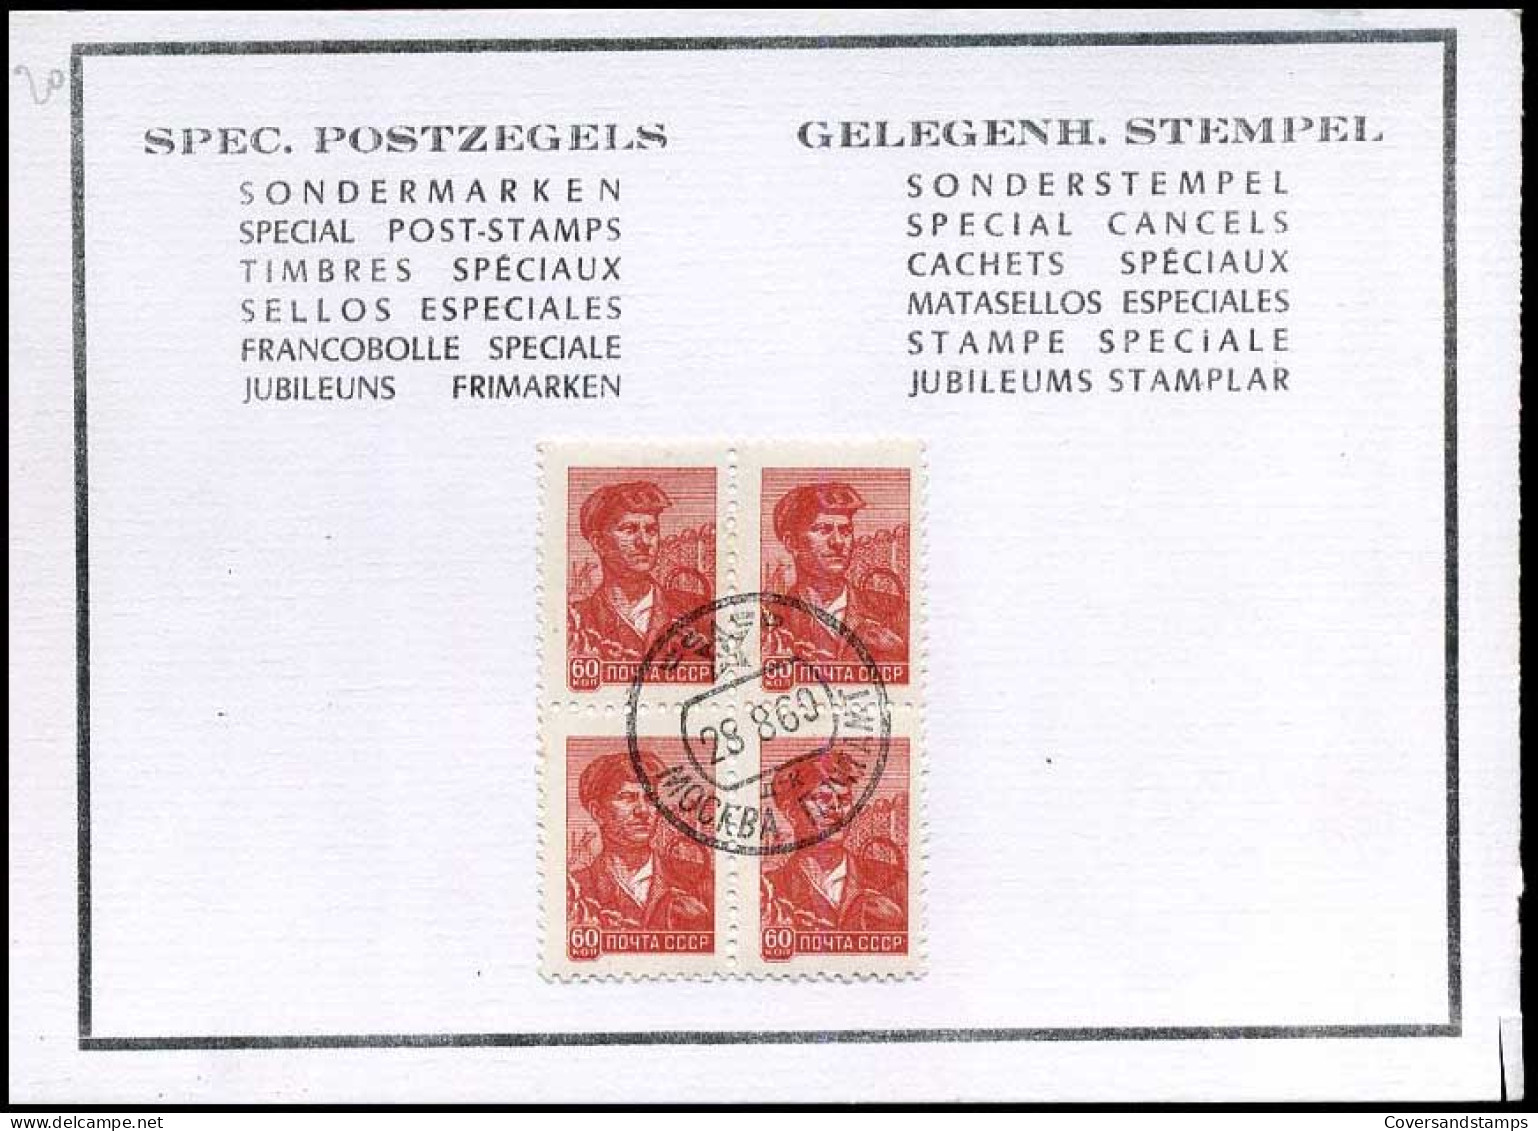 USSR - Gelegenheids Stempel, Speciale Postzegels / Special Post-stamps, Special Cancels - Covers & Documents